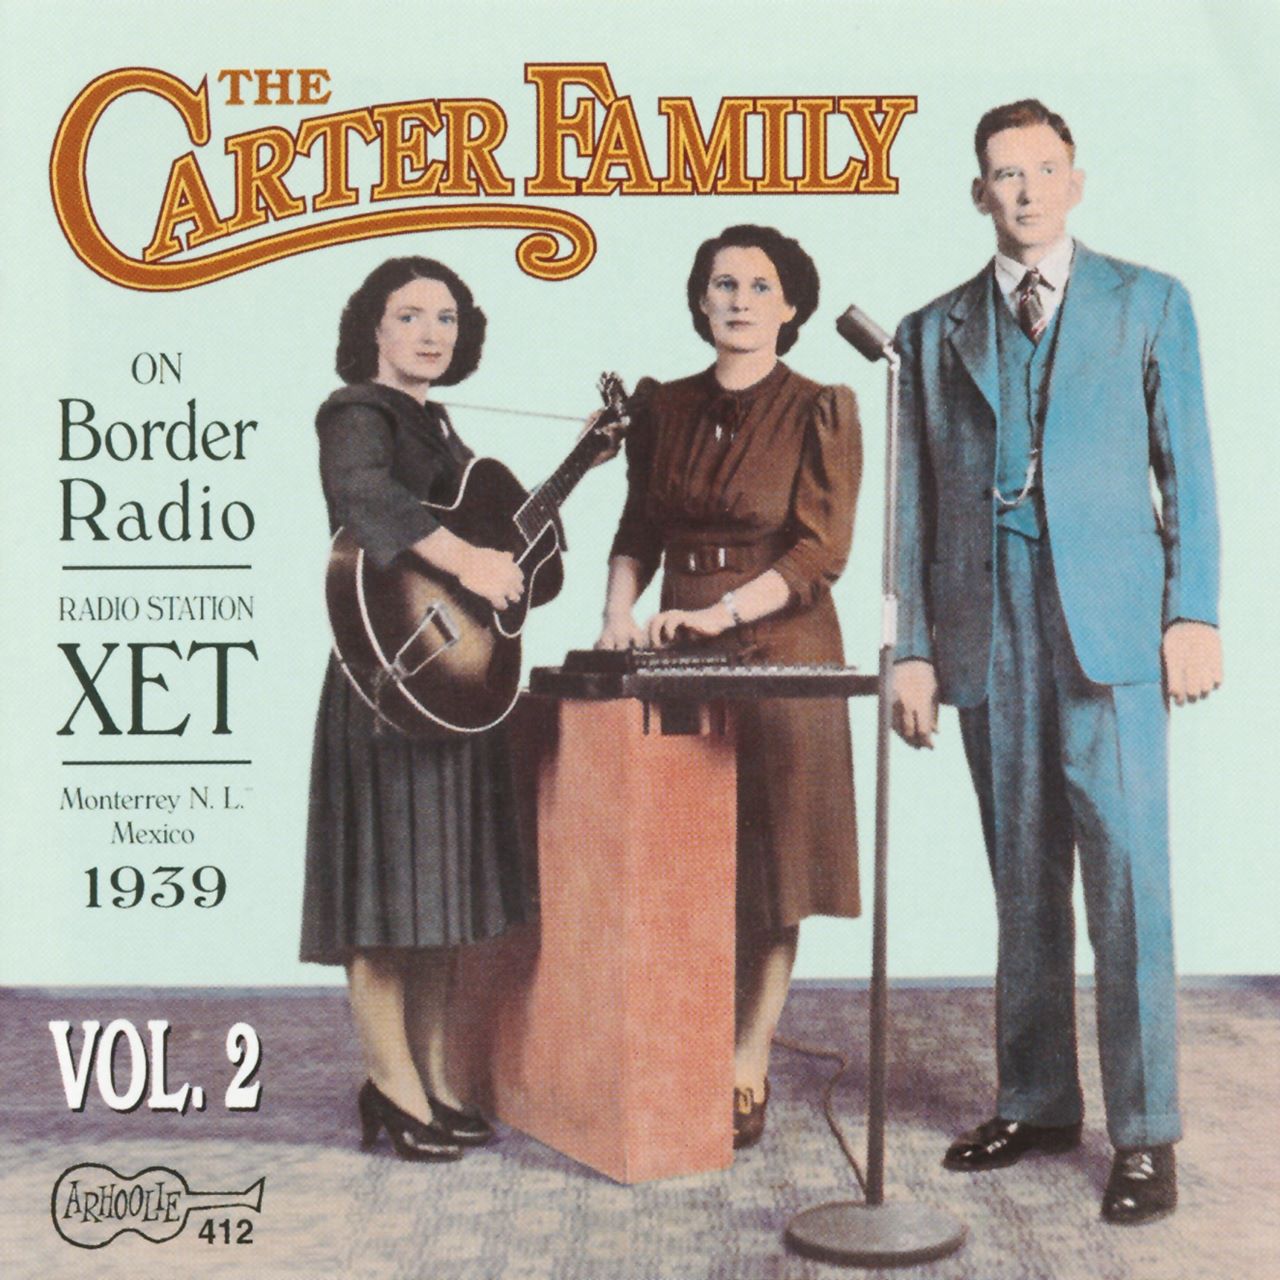 Carter Family - On Border Radio, Vol. 2 cover album